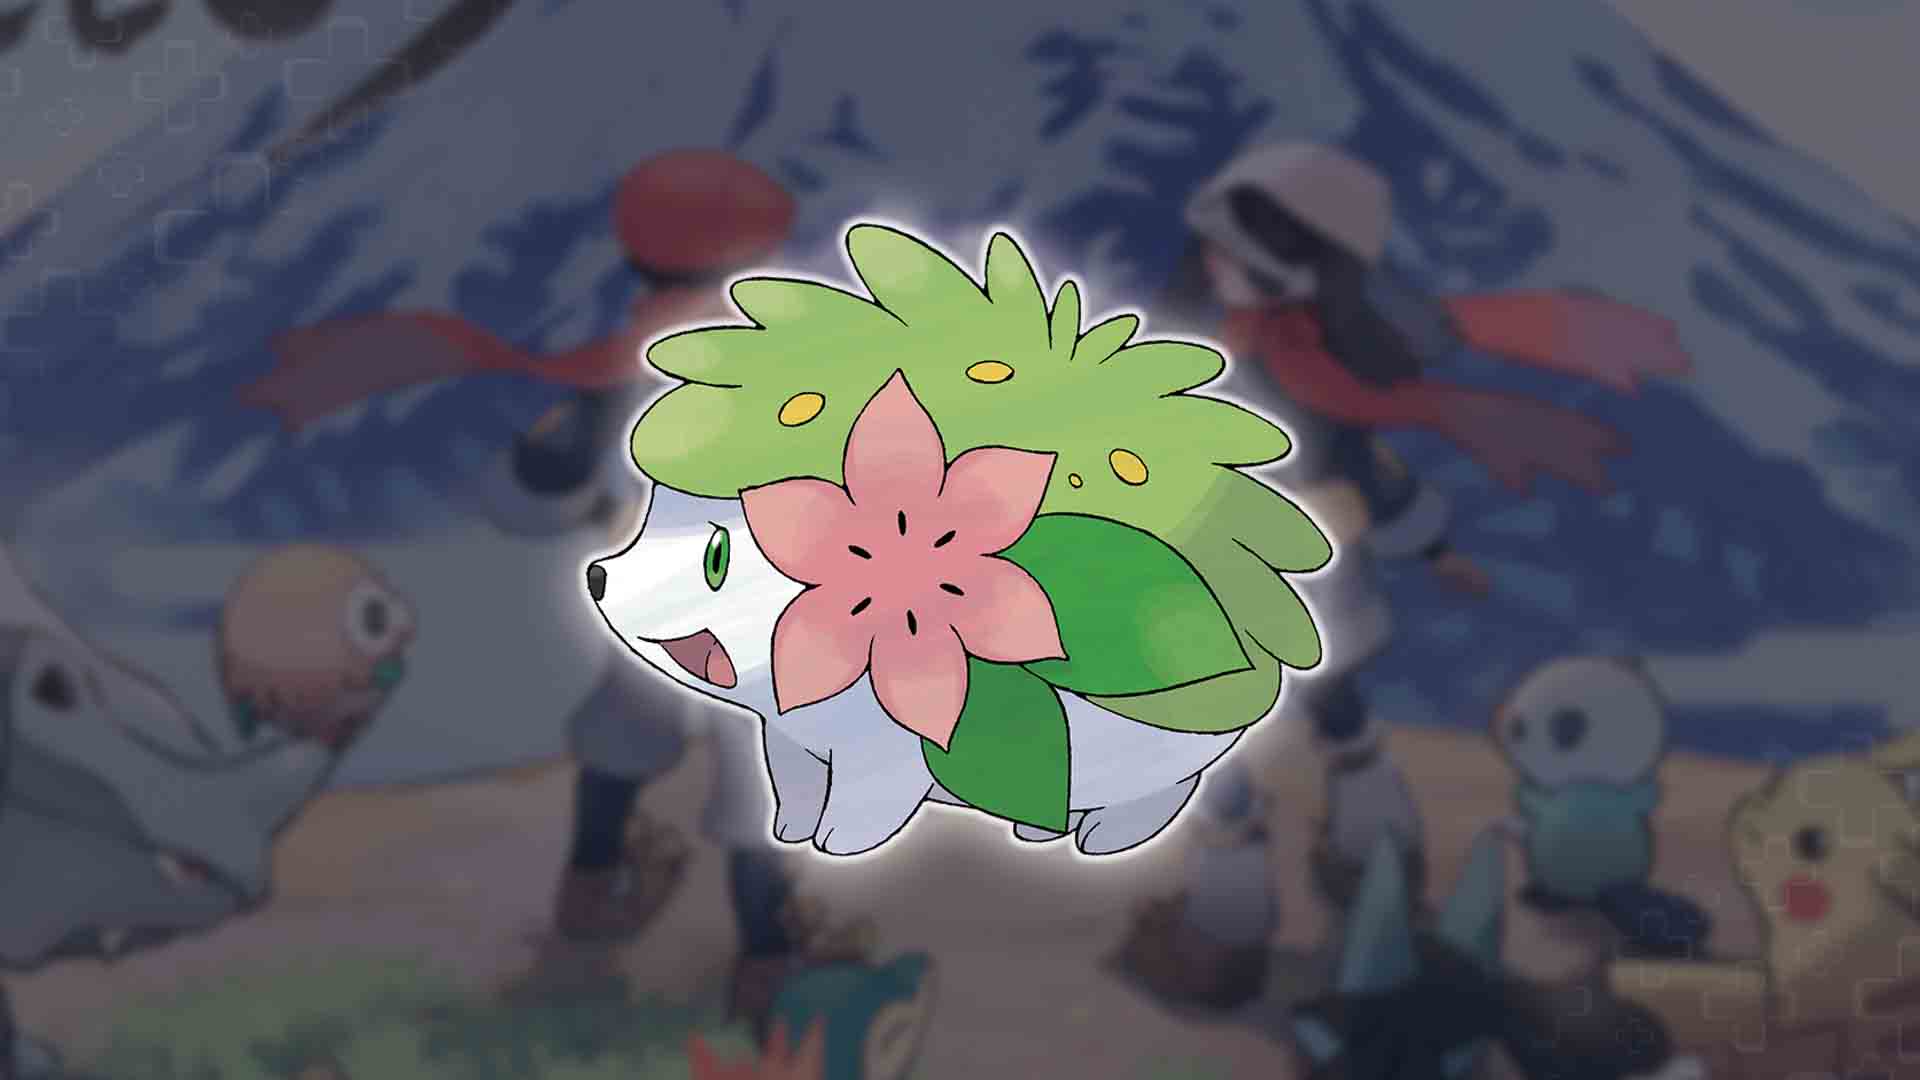 How to Change Shaymin to Sky Form – Pokémon Brilliant Diamond & Shining  Pearl Gracidea Flower 